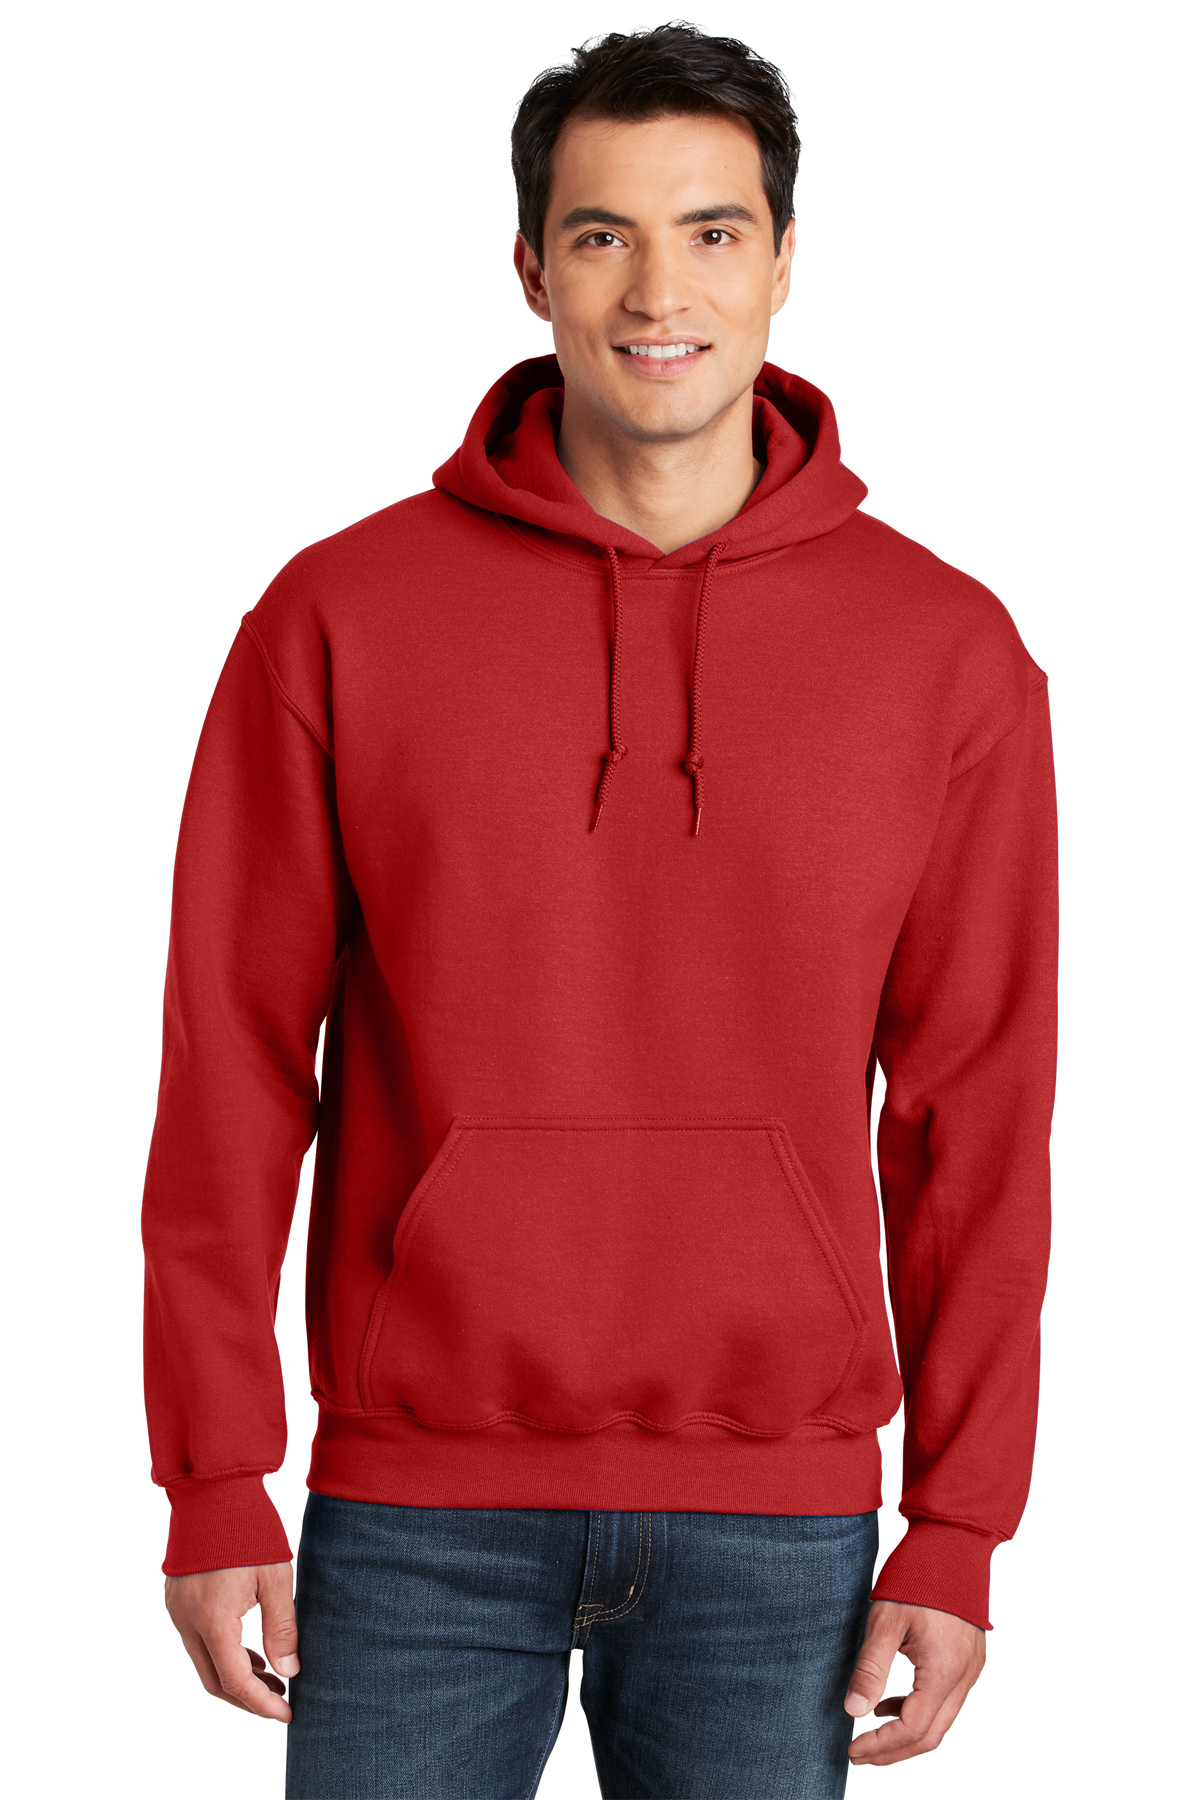 Gildan - DryBlend Pullover Product Hooded Sweatshirt | SanMar 